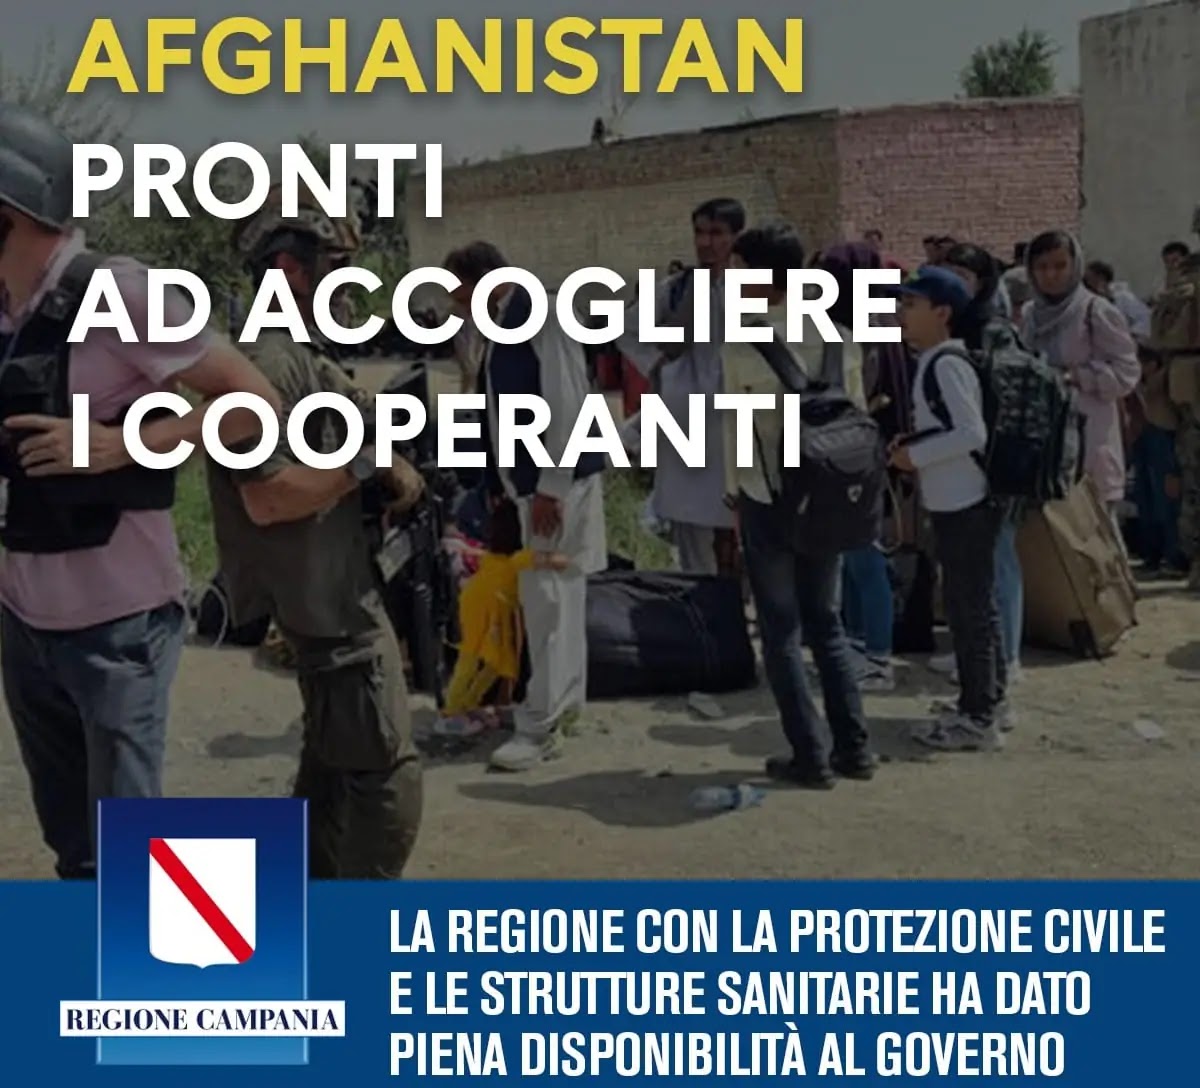 Regione Campania accoglie gli afghani